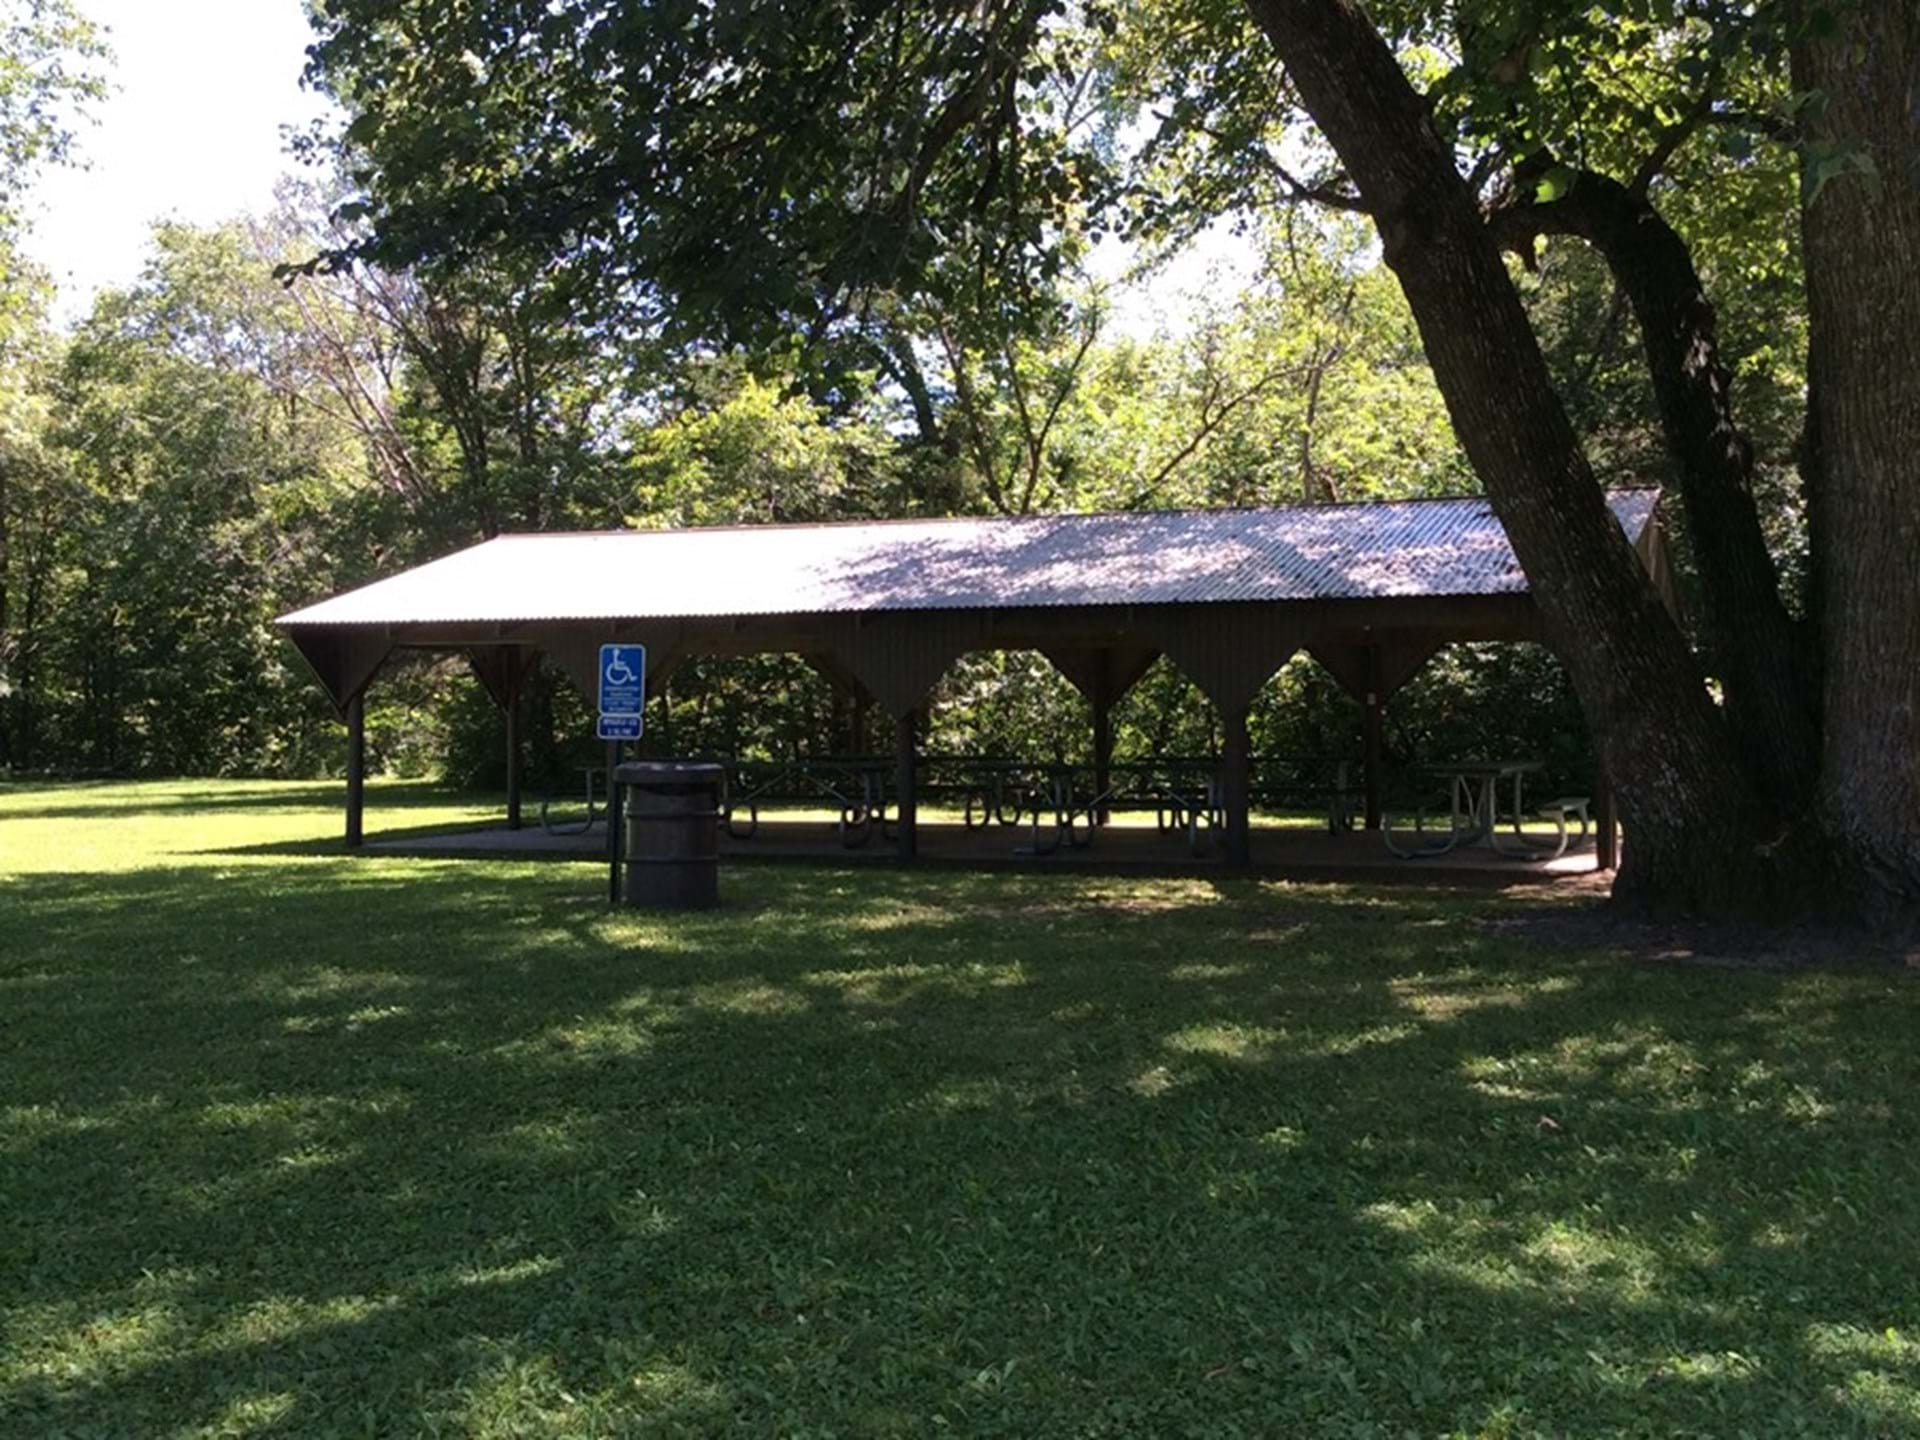 East picnic shelter